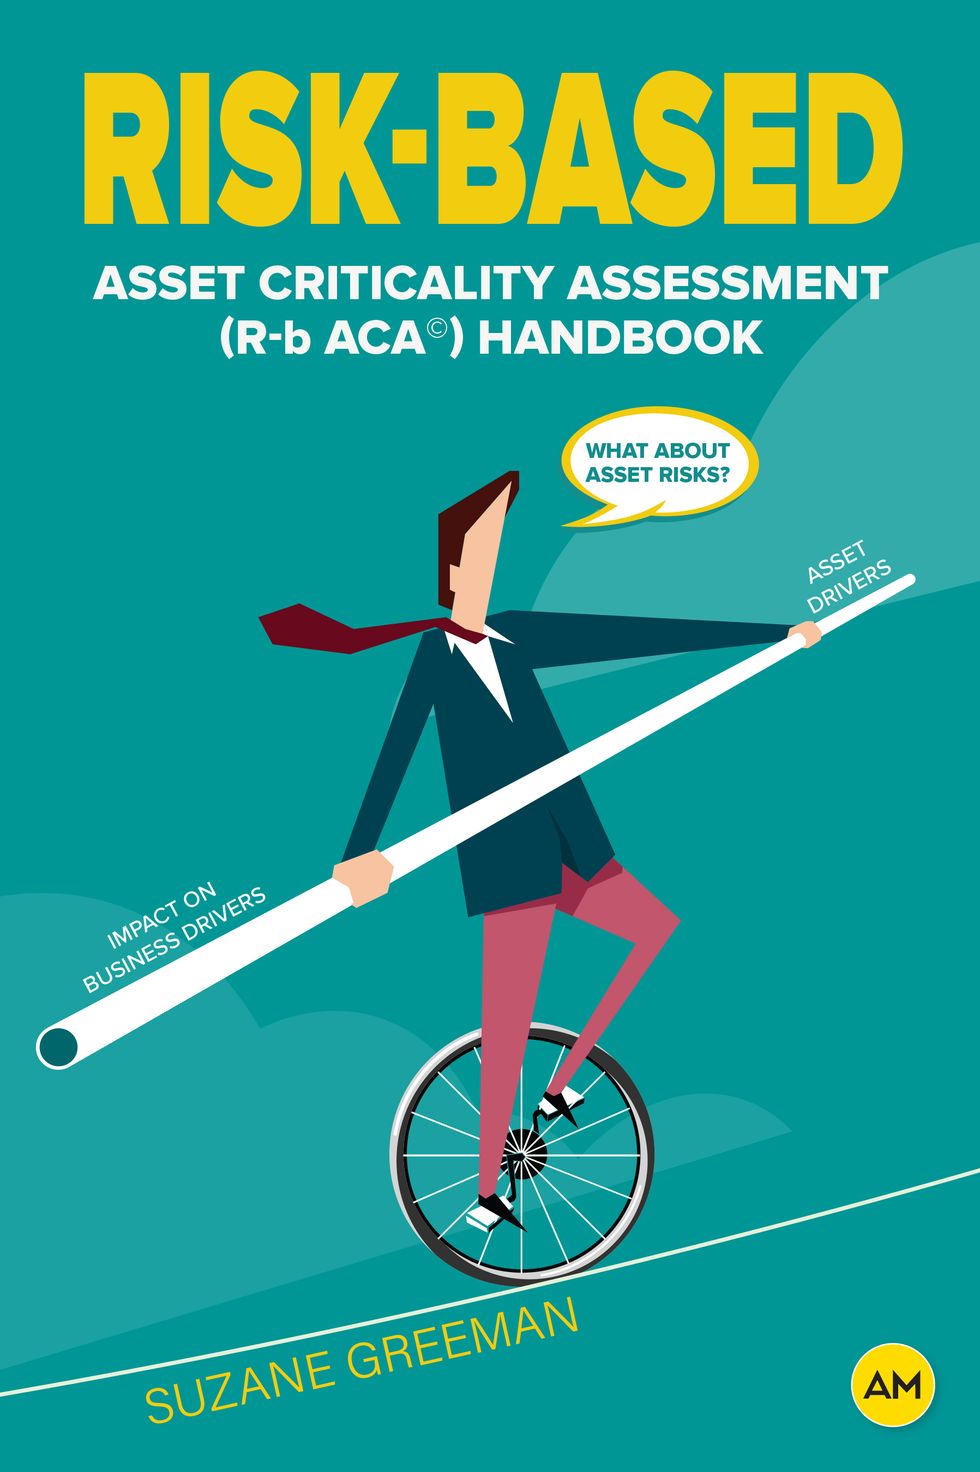  Risk-Based Asset Criticality Assessment Handbook 